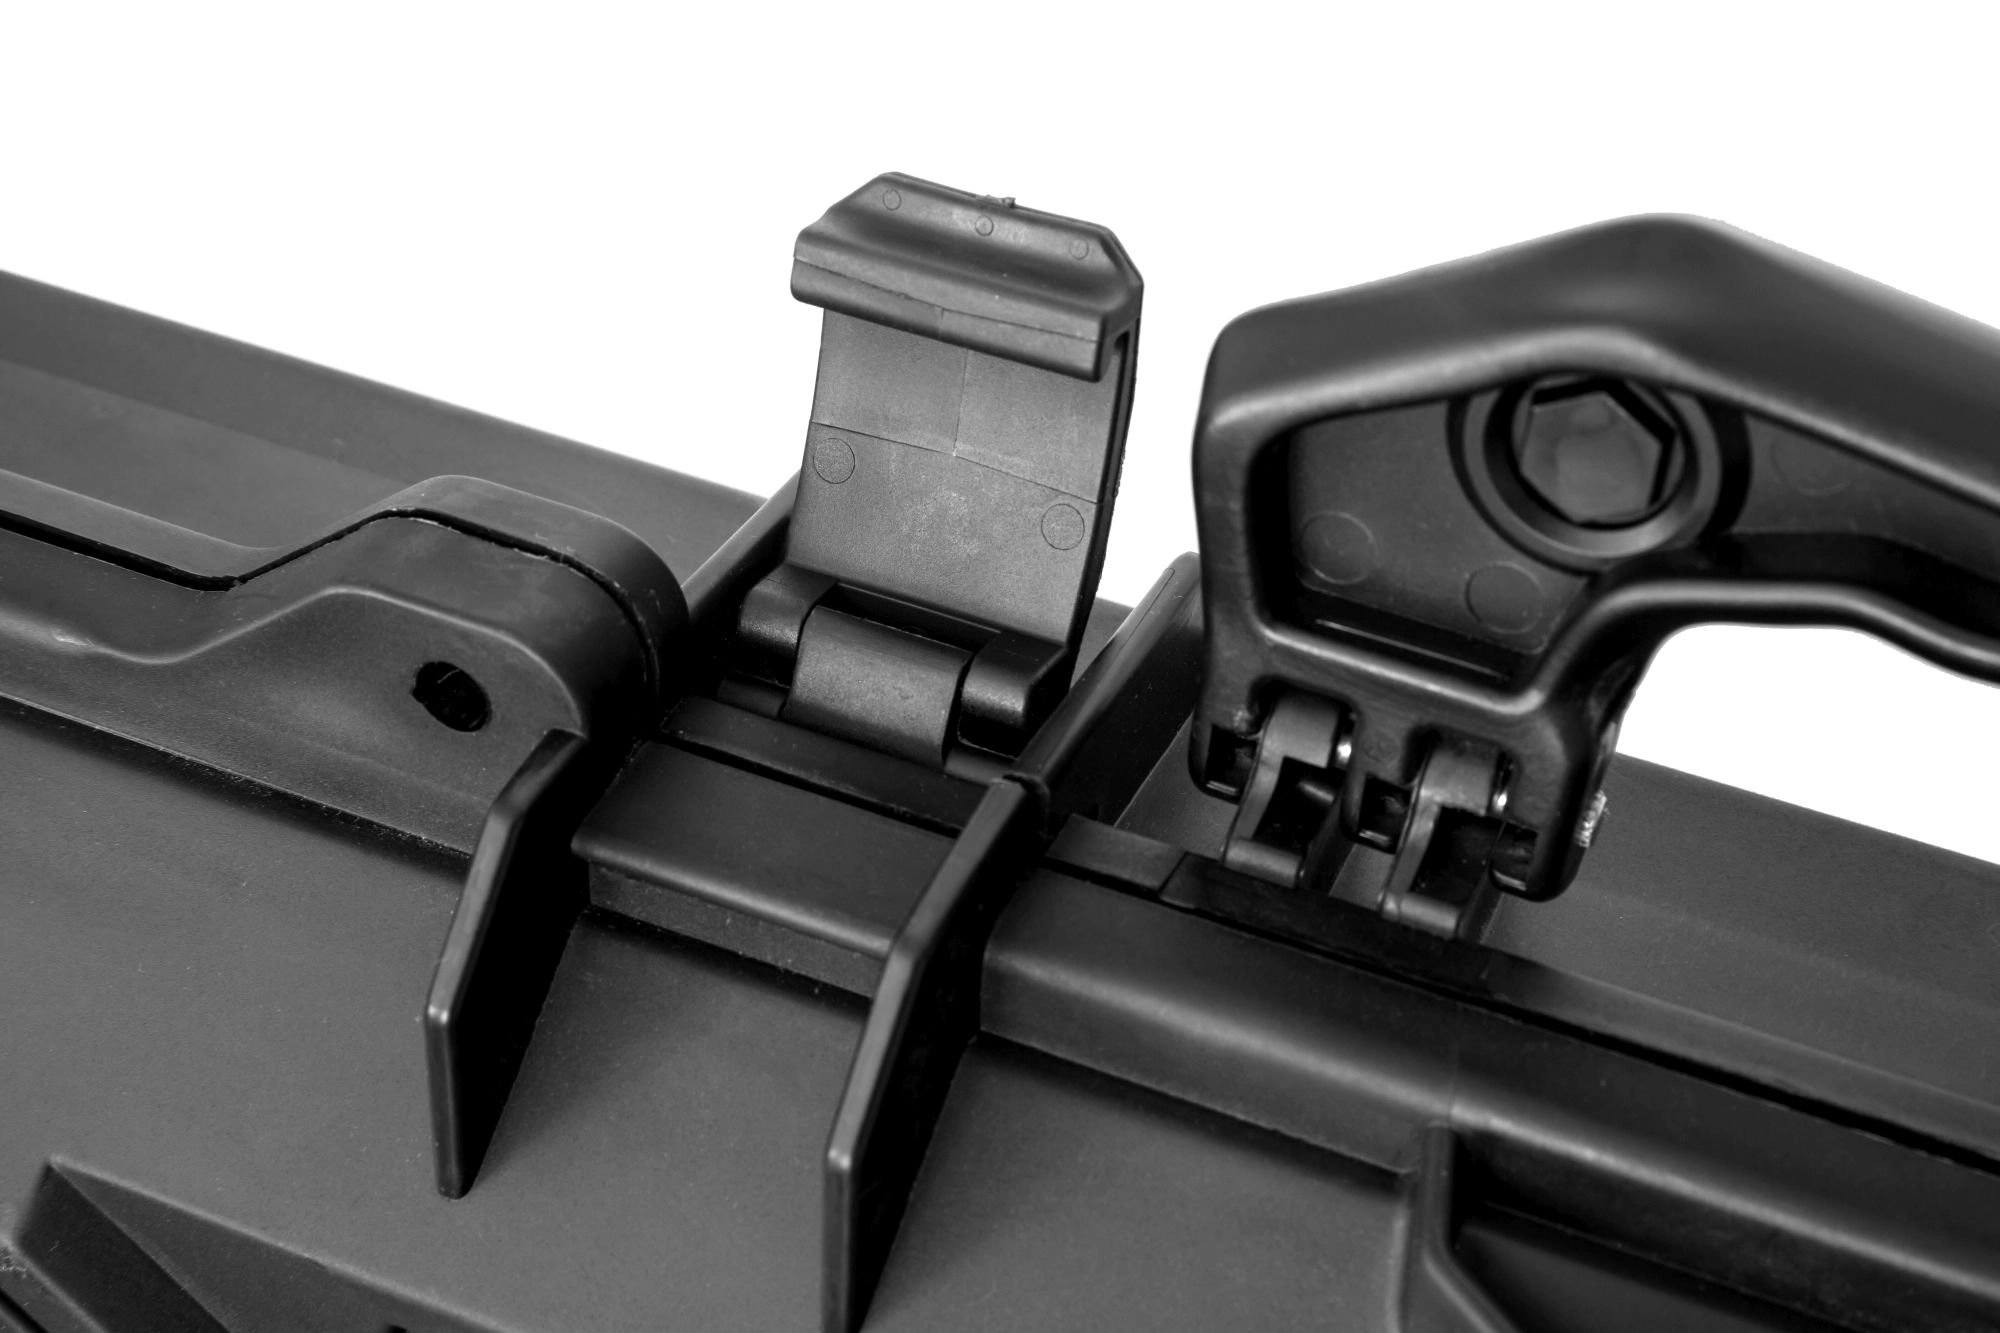 Specna Arms Gun Case 106cm